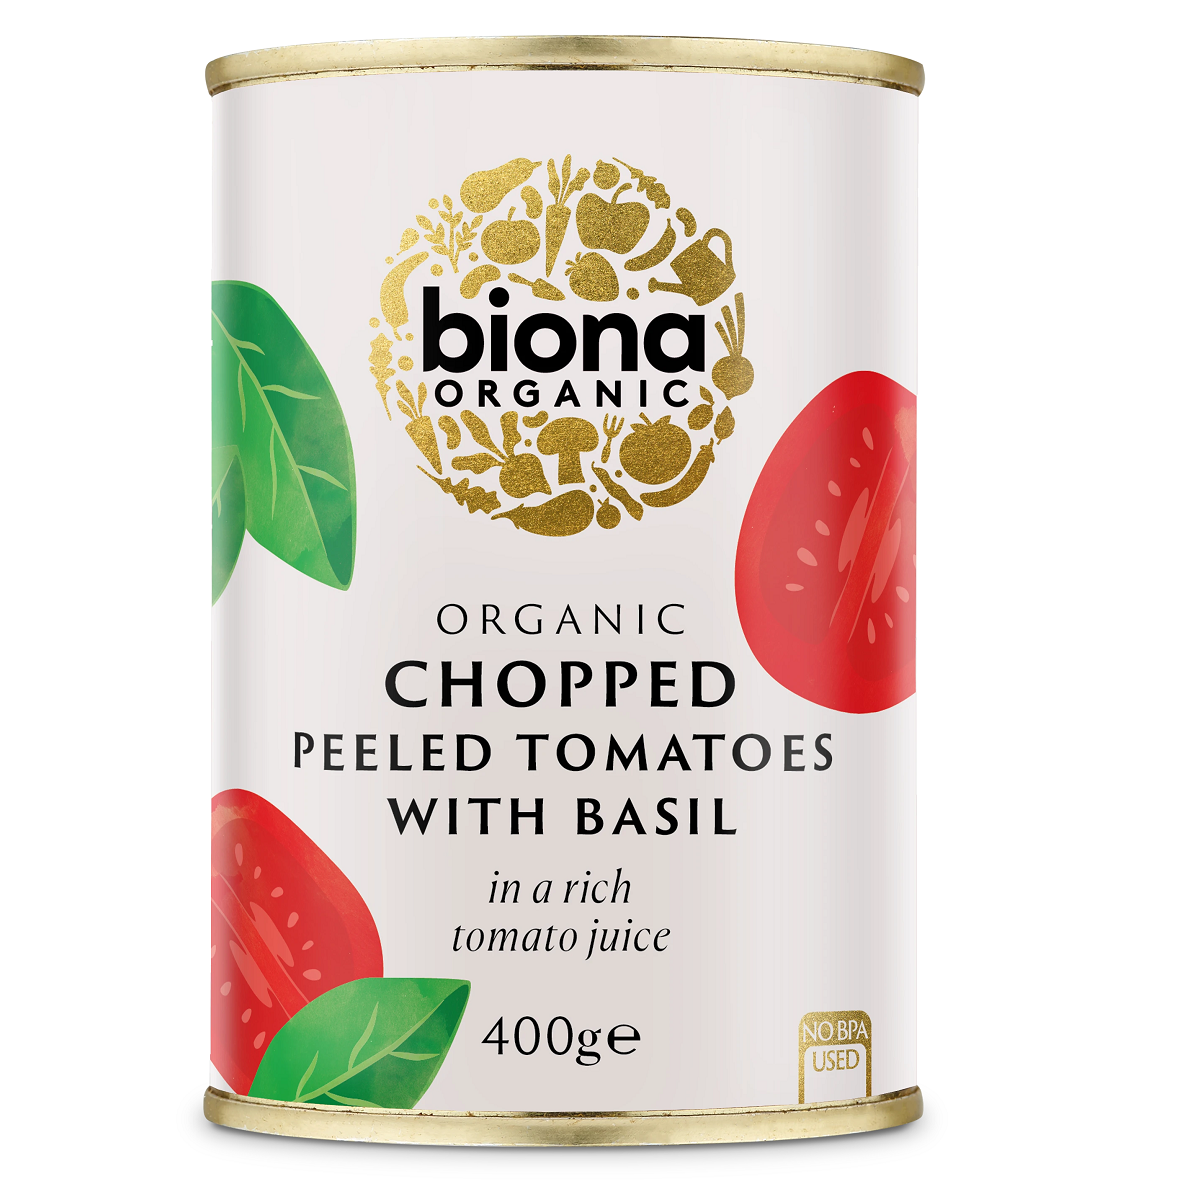 Biona Organic Chopped Peeled Tomatoes with Basil 400g